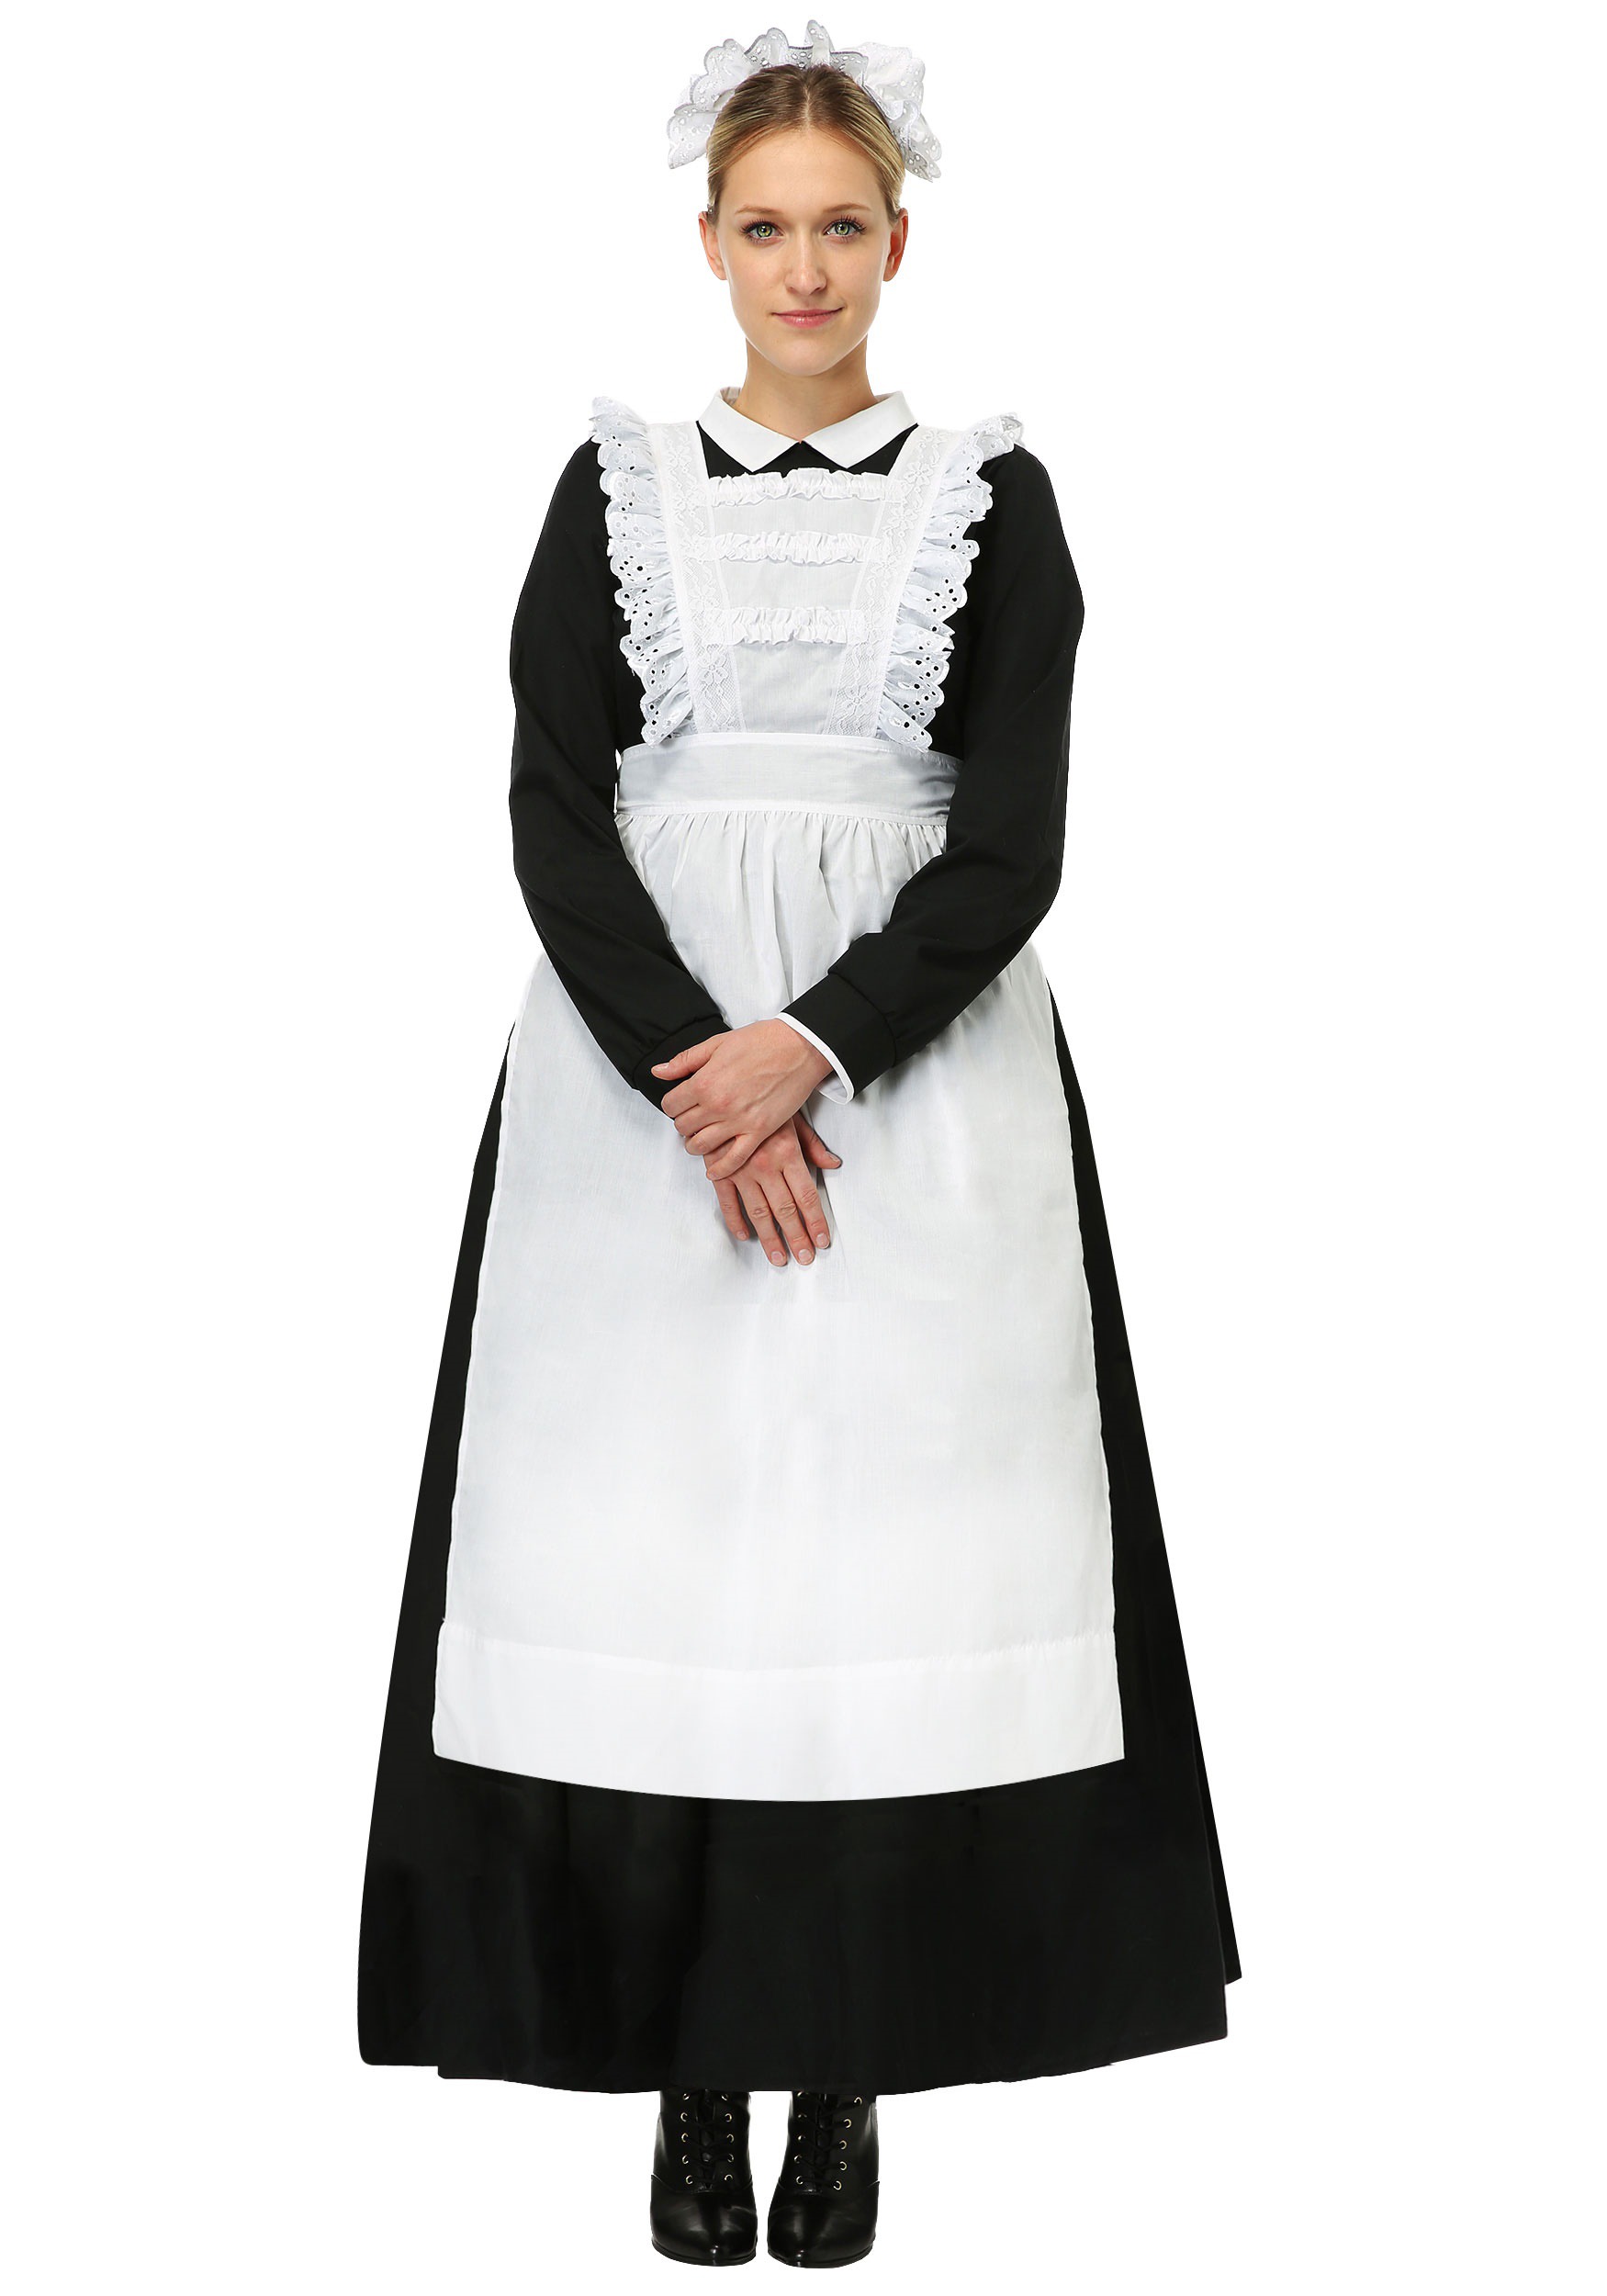 Photos - Fancy Dress FUN Costumes Women's Traditional Maid Costume Black/White FUN1520AD